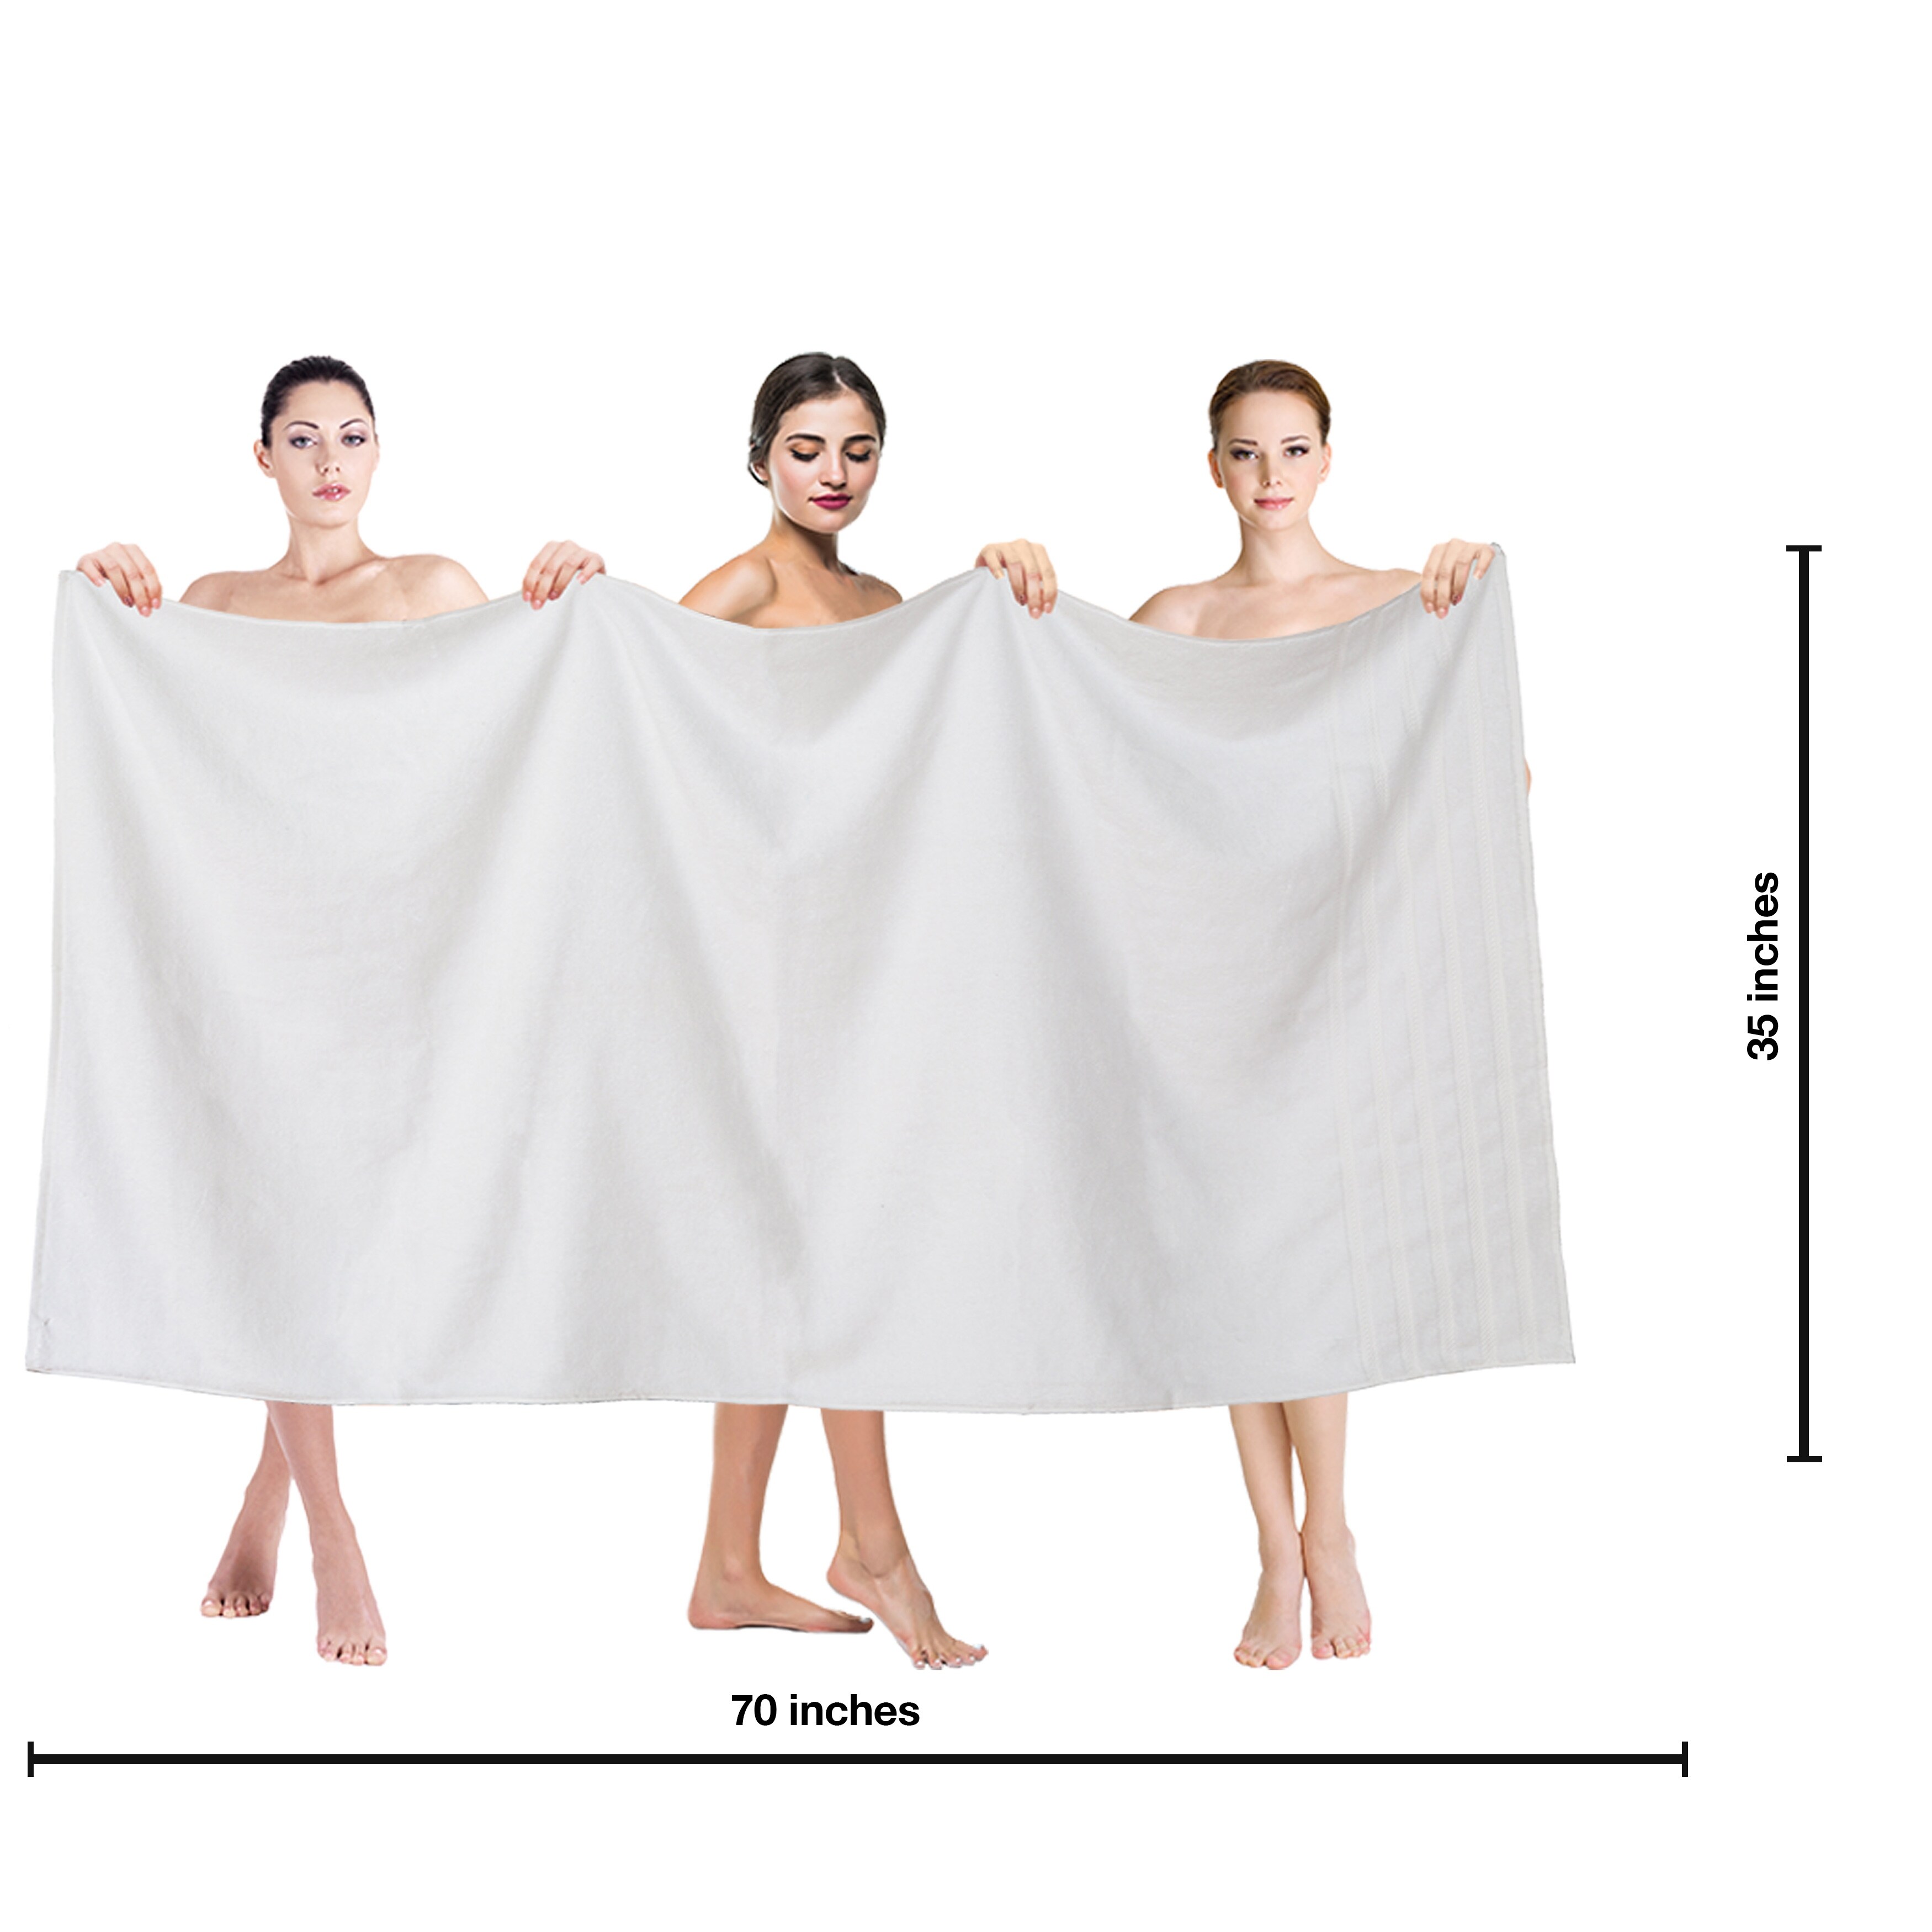 Large Jumbo Bath Towel 35x70 Premium & Luxury Towels for Bathroom Worth $34.95 - Black American Soft Linen Turkish Cotton Maximum Softness & Absorbent Bath Sheet